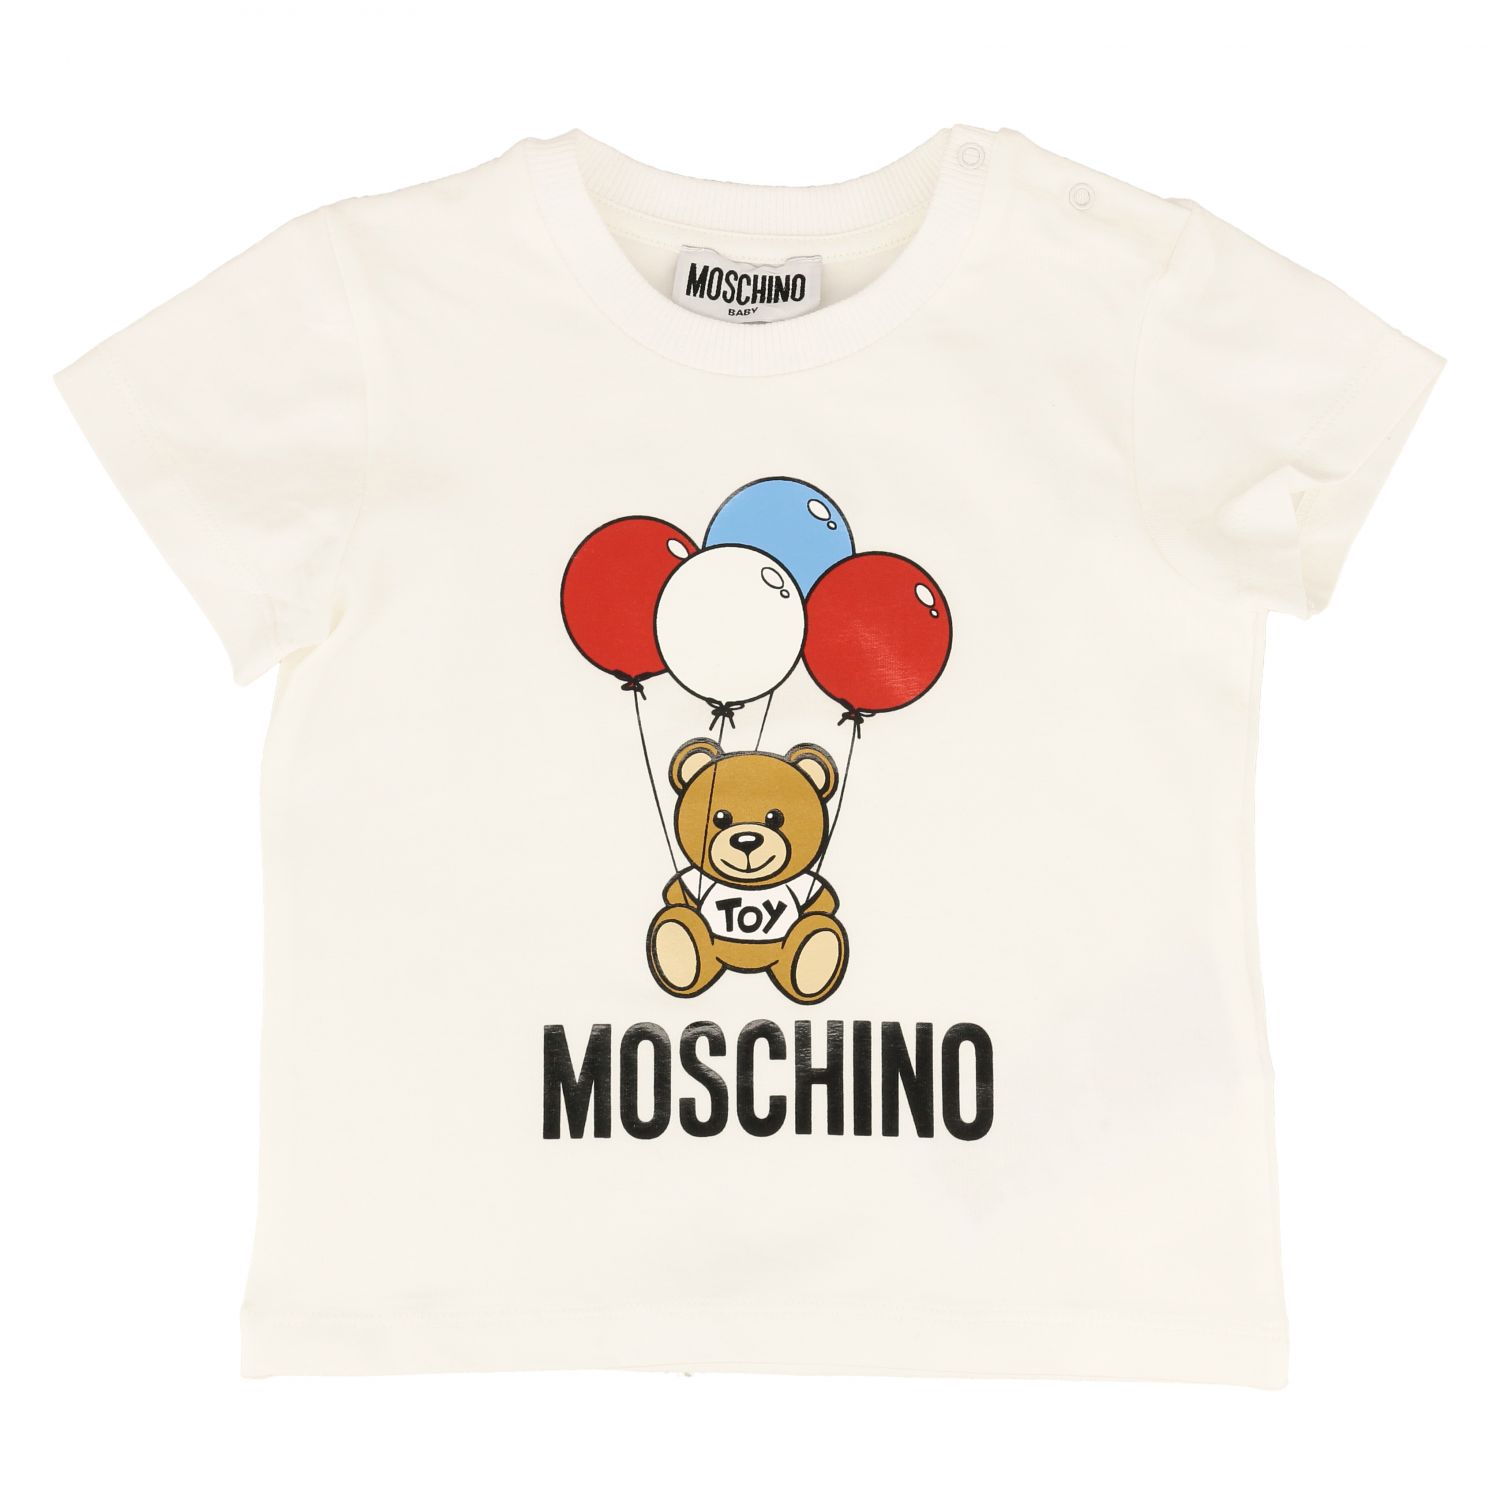 Moschino Baby T Shirt Deals, 59% OFF | www.ingeniovirtual.com